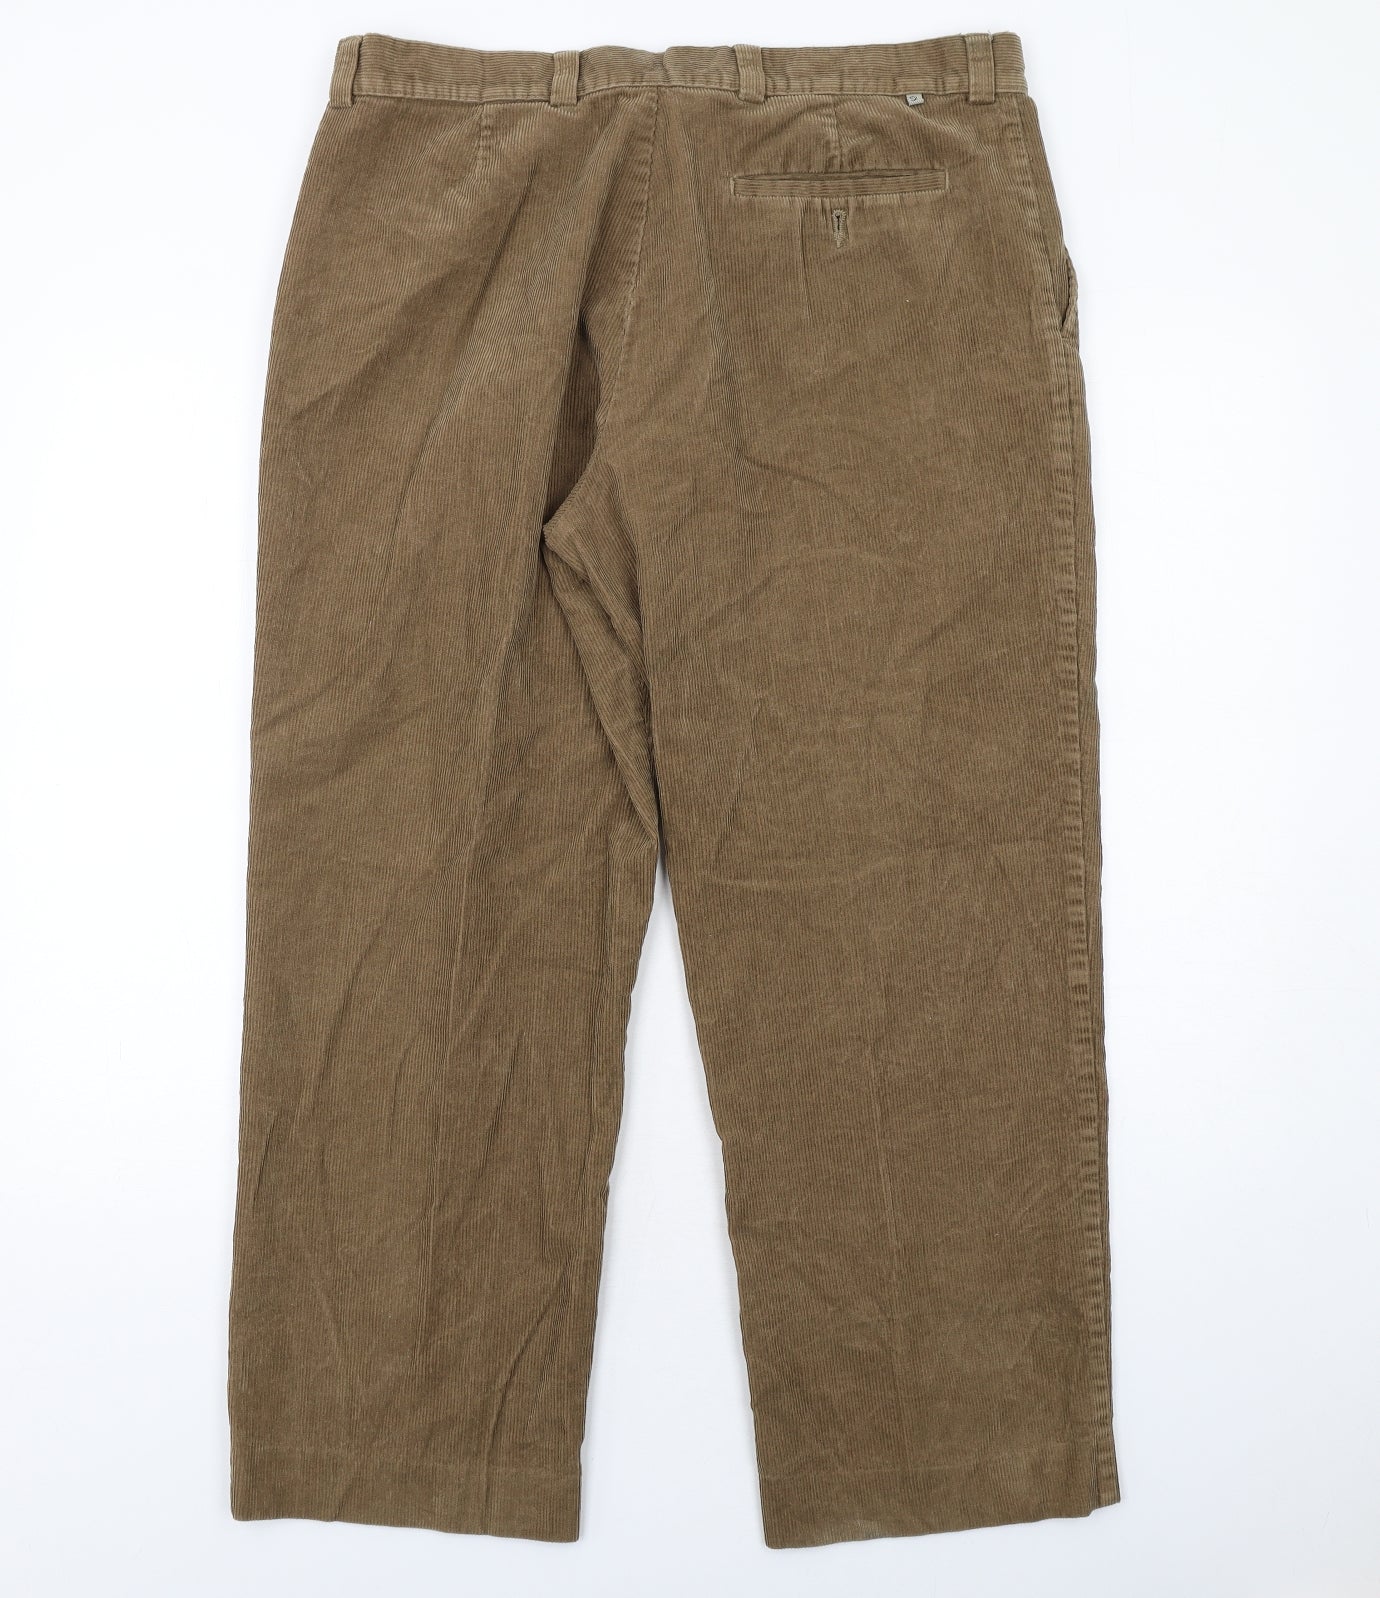 Farah Mens Brown Cotton Trousers Size 38 in L29 in Regular Zip